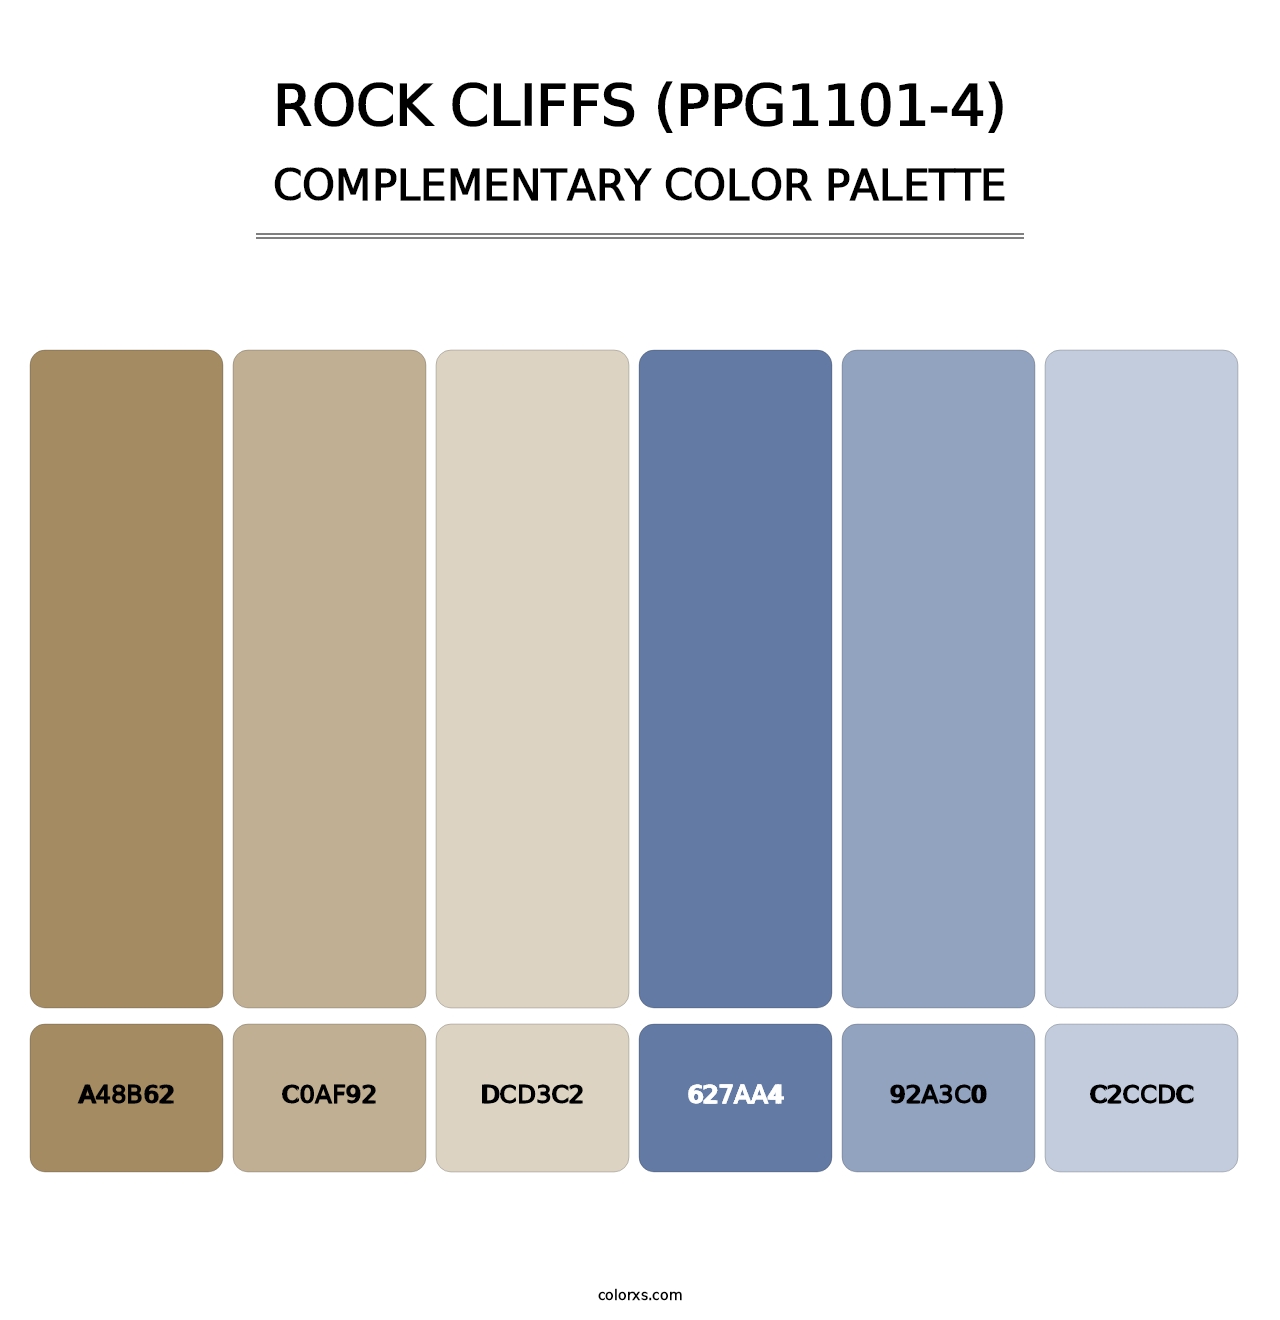 Rock Cliffs (PPG1101-4) - Complementary Color Palette